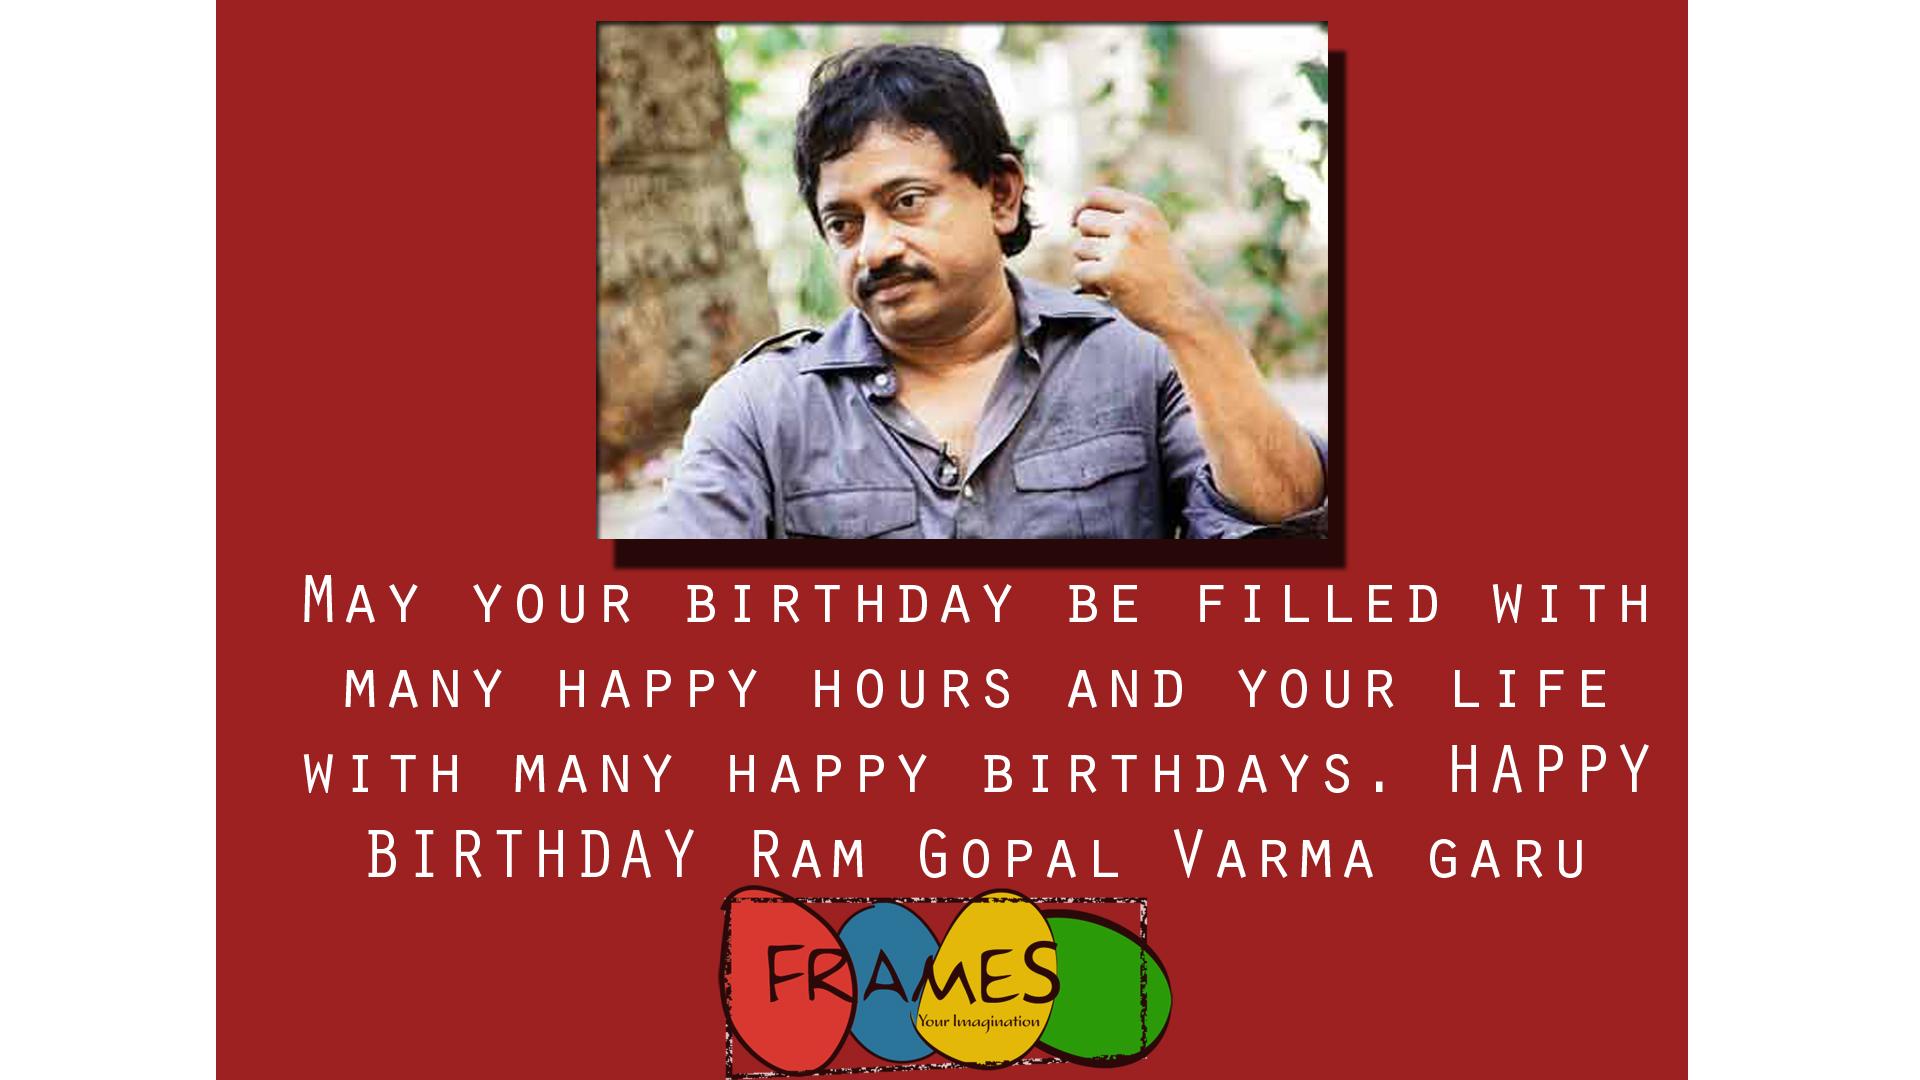 Happy Birthday ram gopal varma garu 